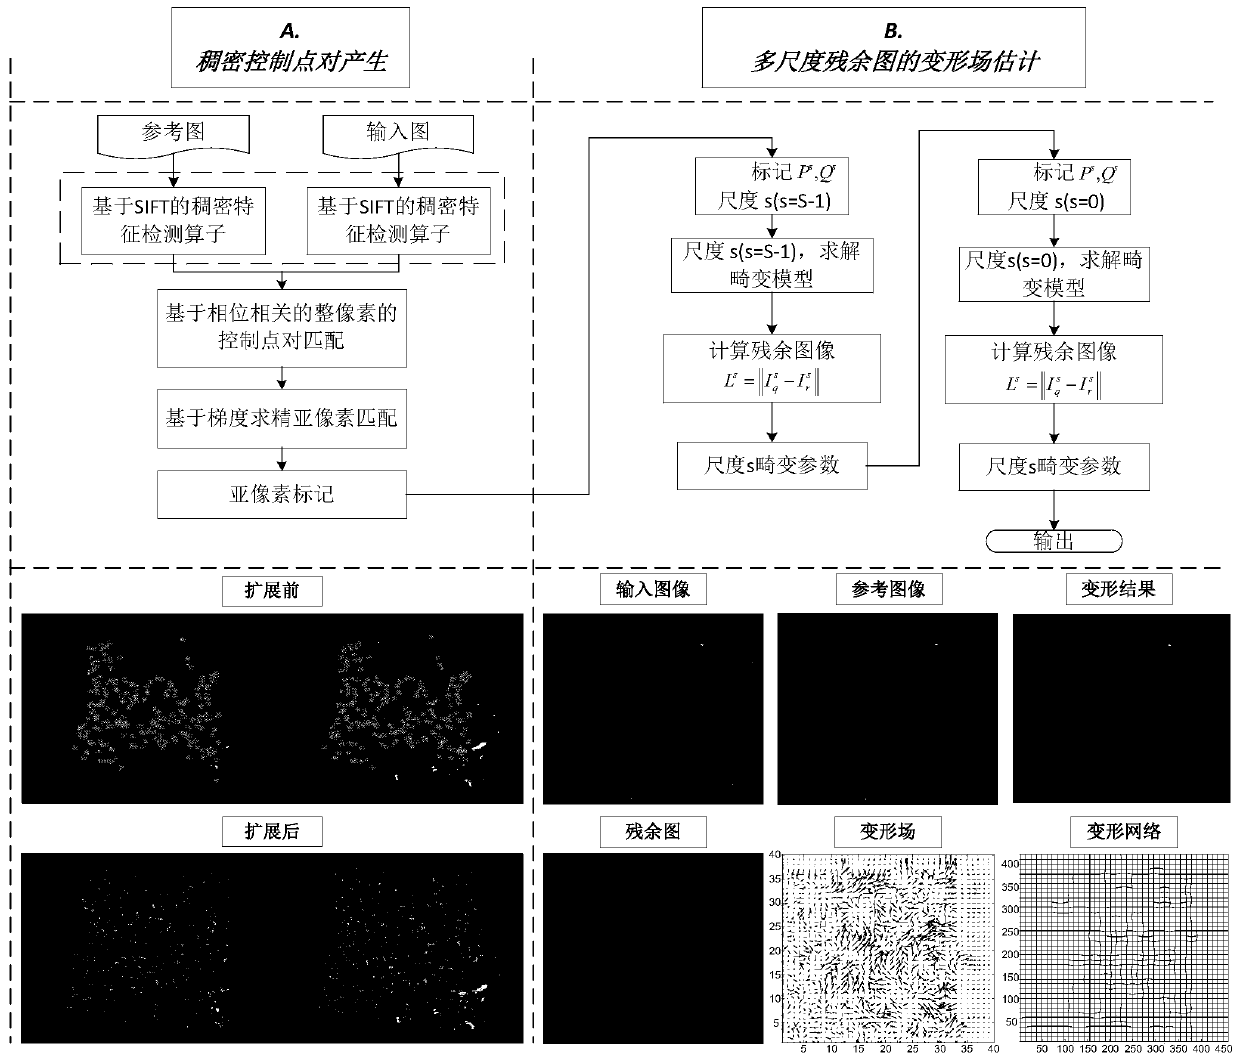 SAR full-image deformation field estimation method based on multi-scale residual image regularization